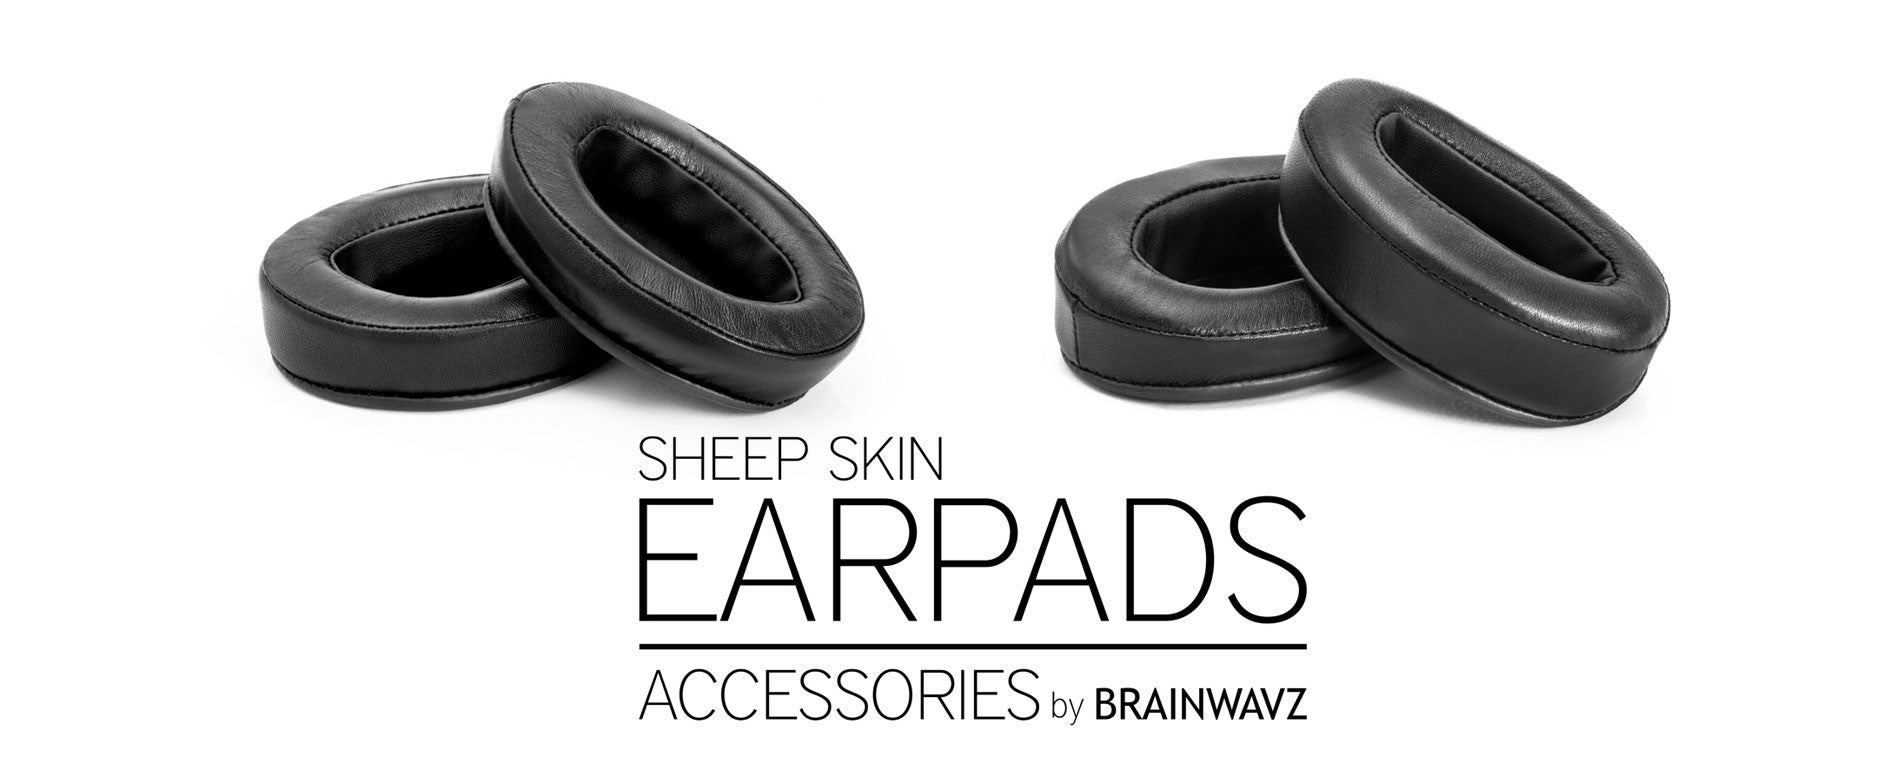 Brainwavz Earpads For Headphones: Now In Sheep Skin Leather!